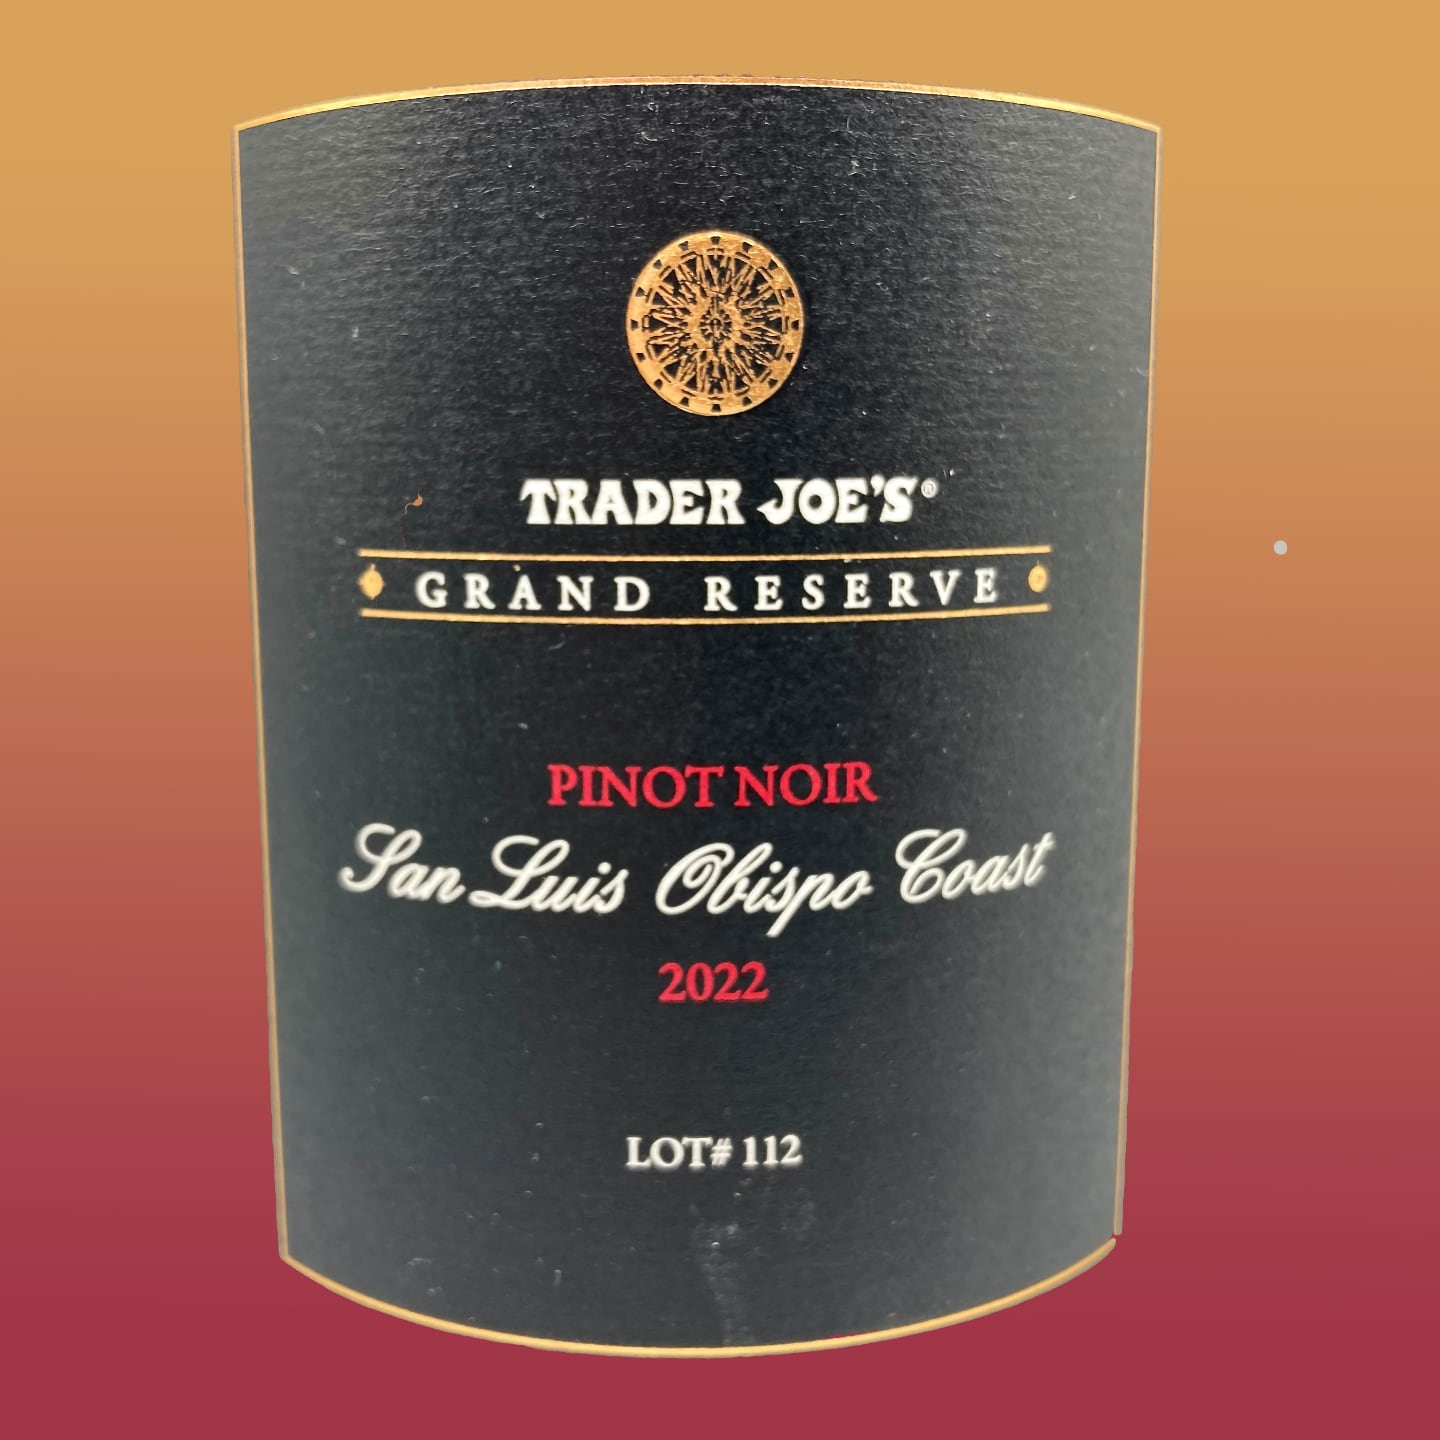 Trader Joe's Grand Reserve San Luis Obispo Coast Pinot Noir 2022